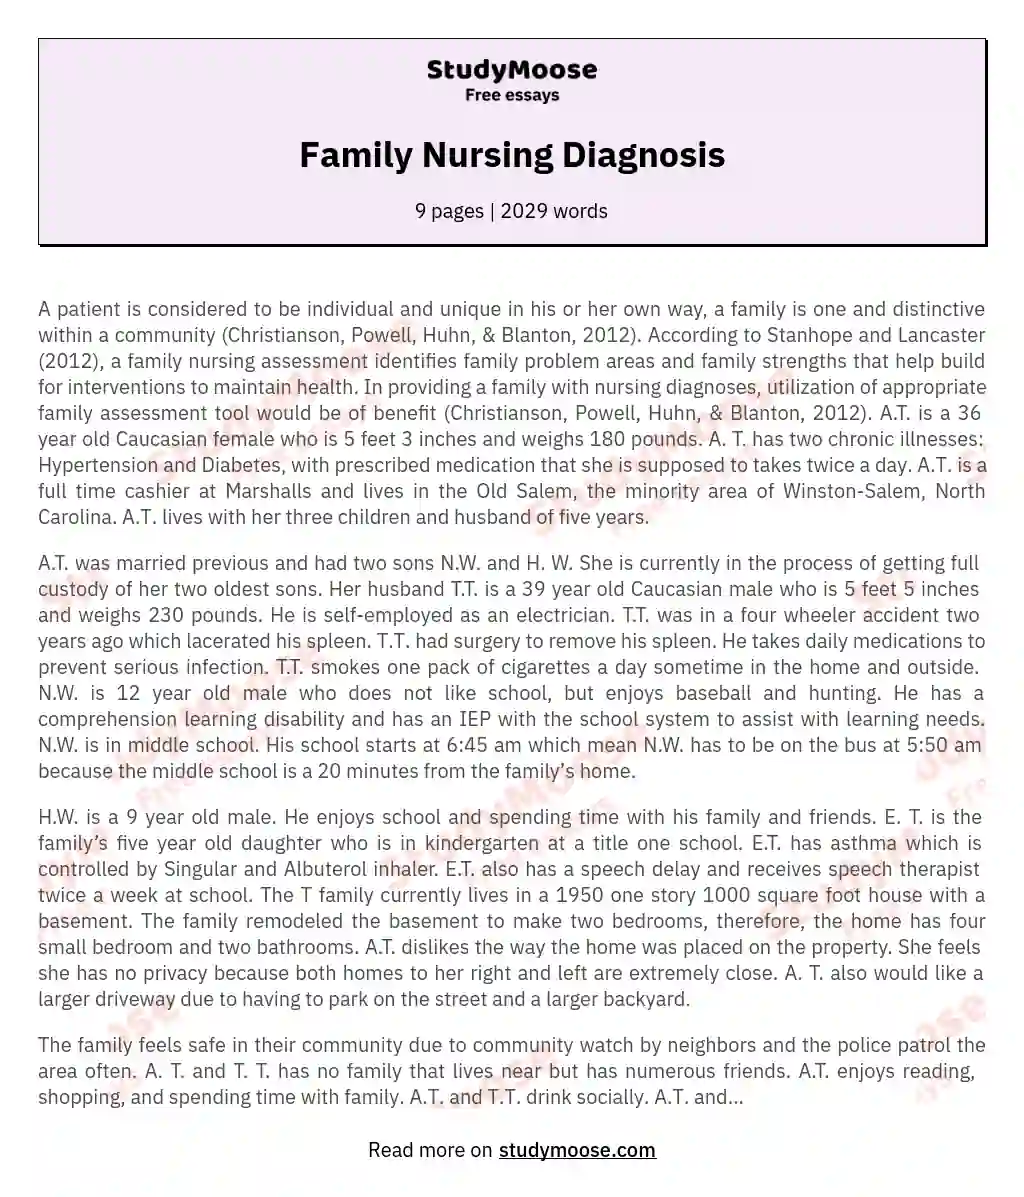 Family Nursing Diagnosis essay